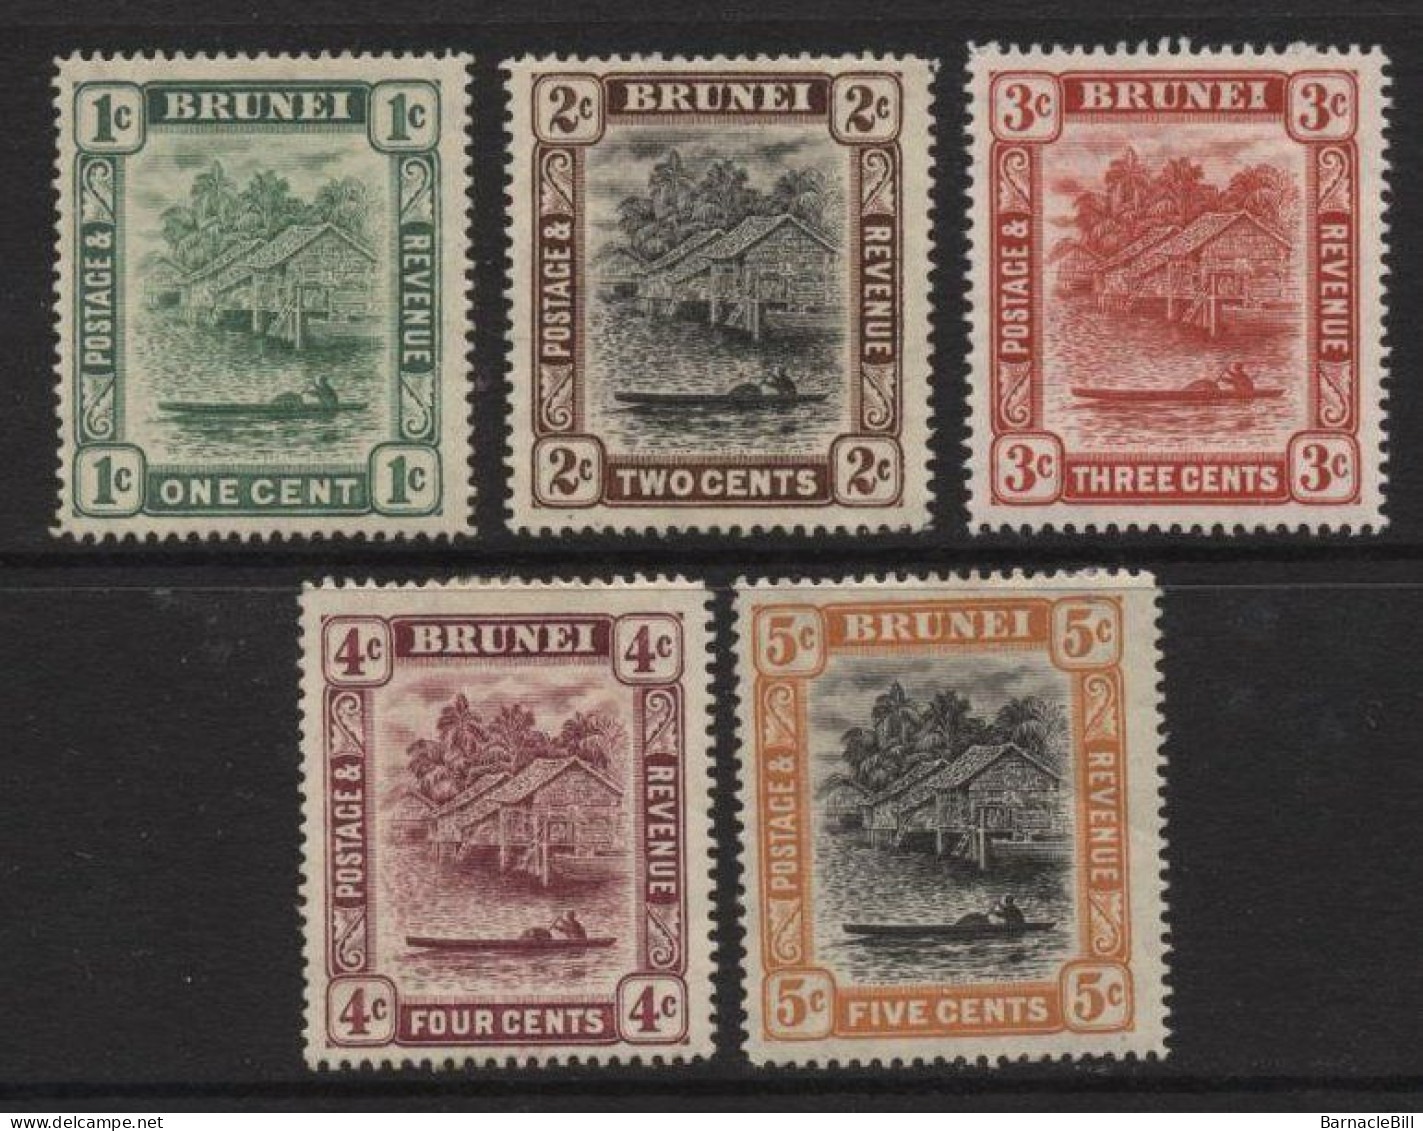 Brunei (07) 1908 Issue. Watermark Multiple Crown CA. 5 Values. Unused. Hinged. - Brunei (...-1984)